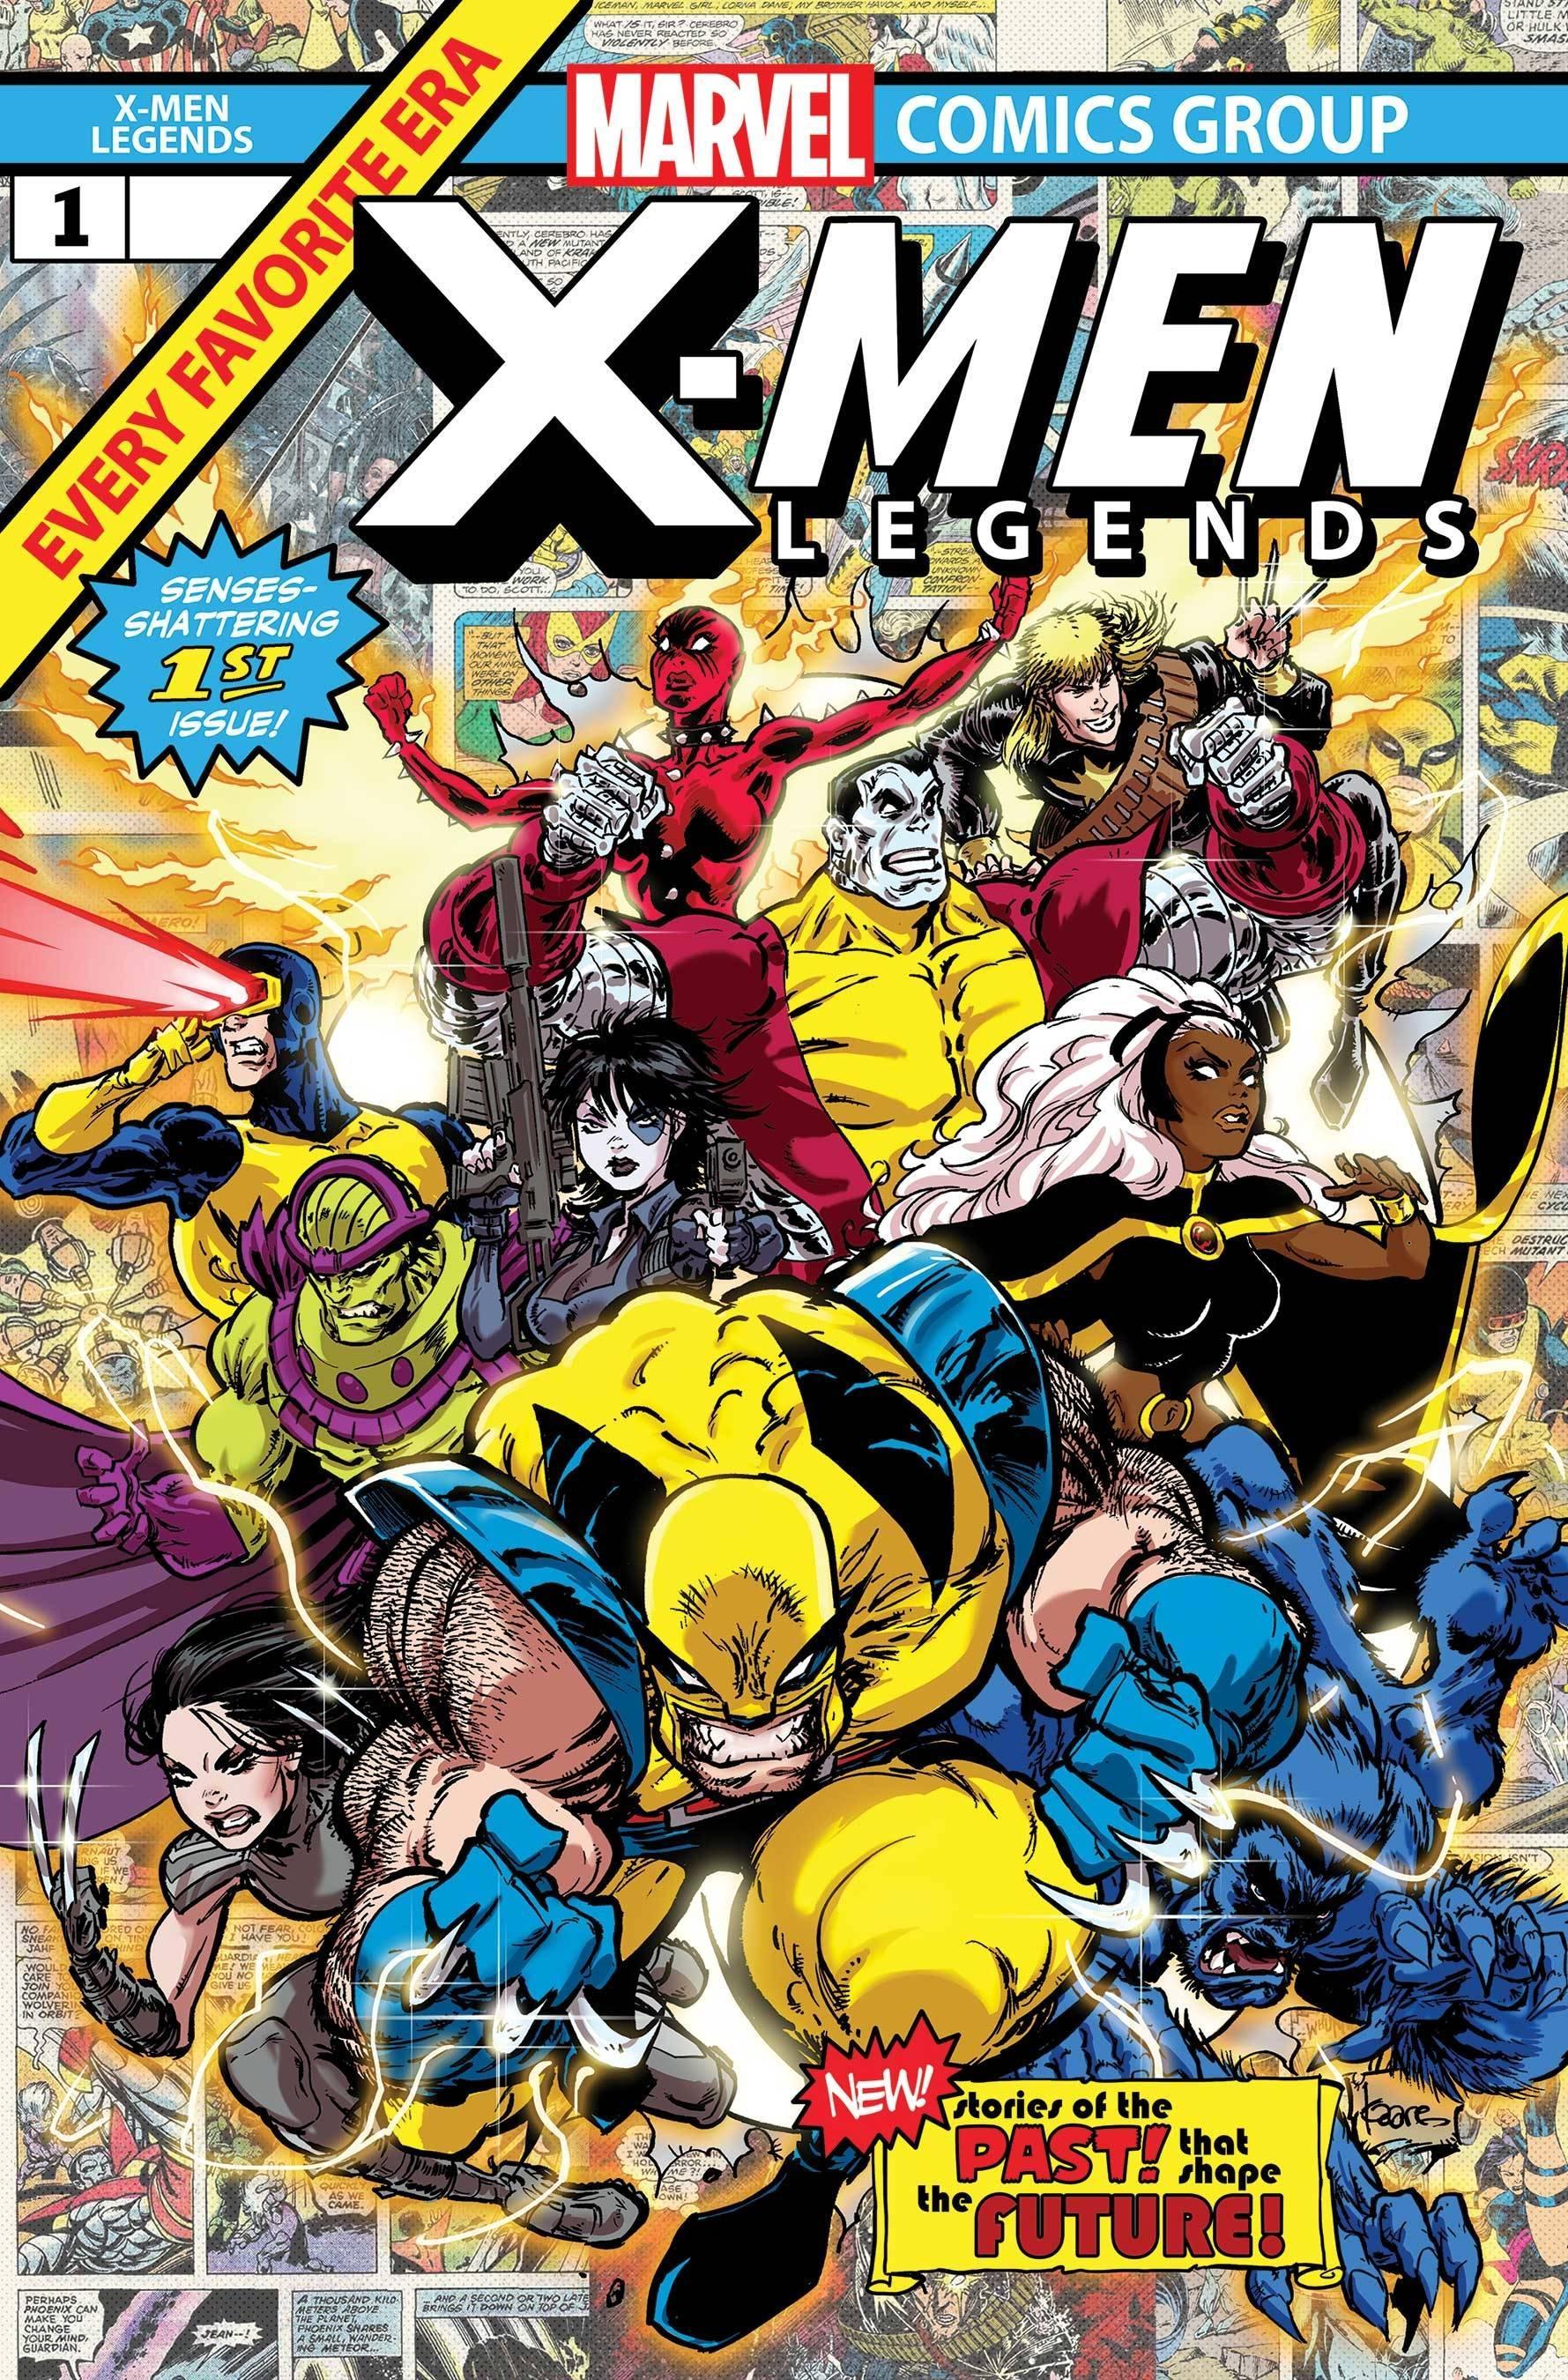 X-MEN LEGENDS #1